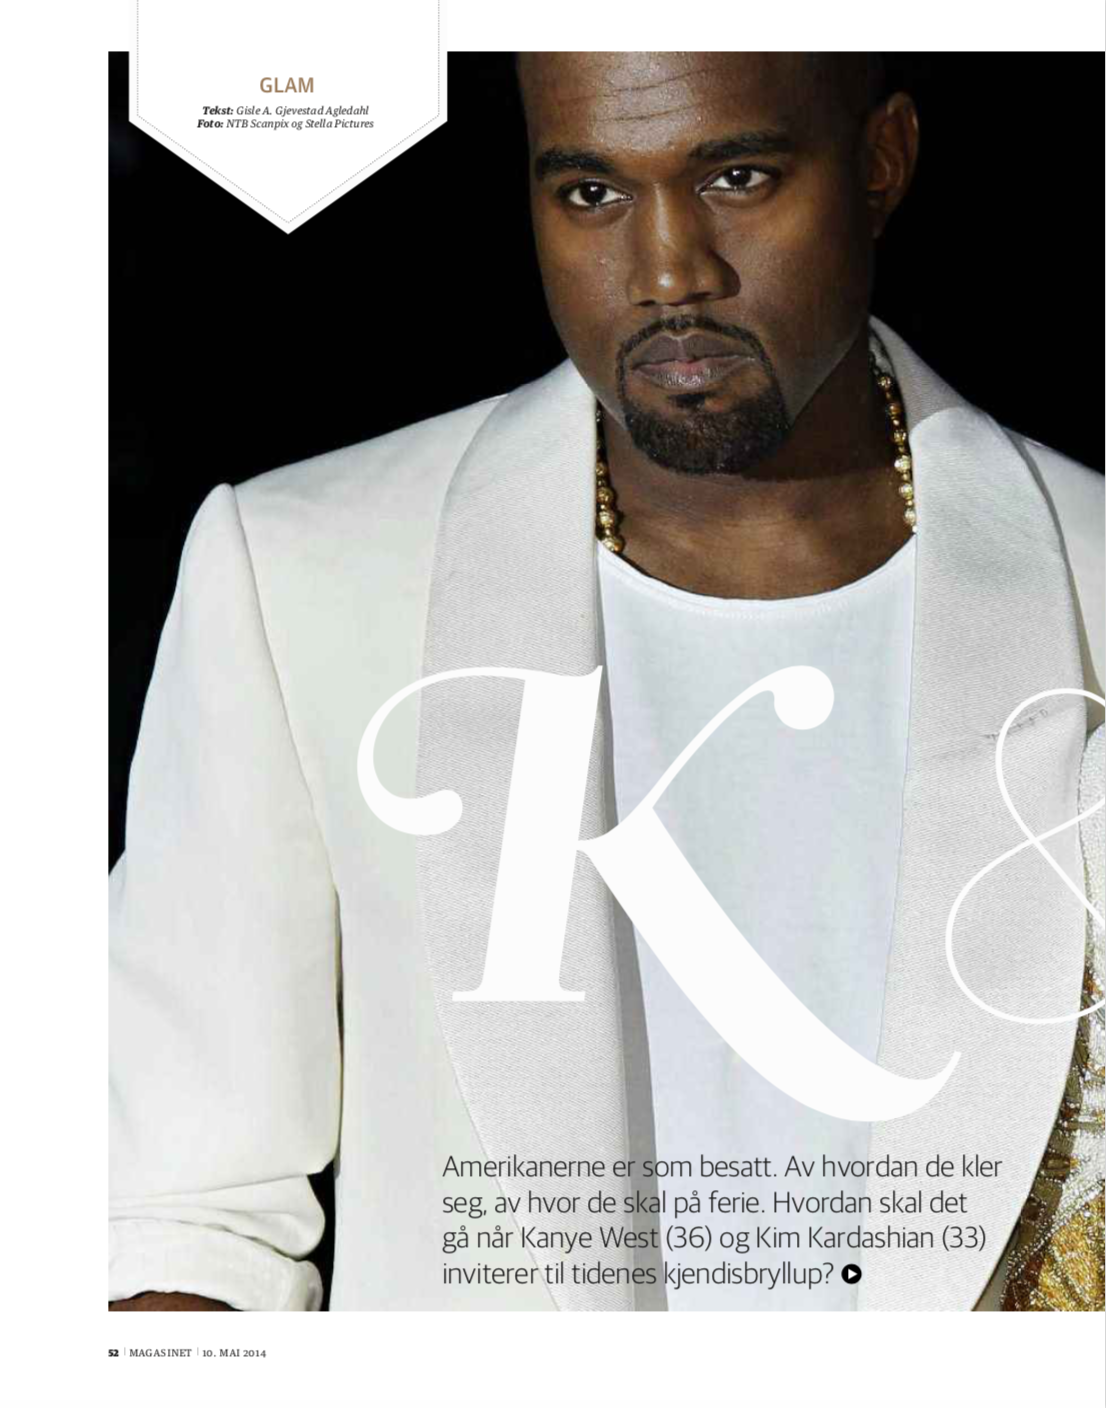 Dagbladet article about Kim Kardashian and Kanye West's wedding